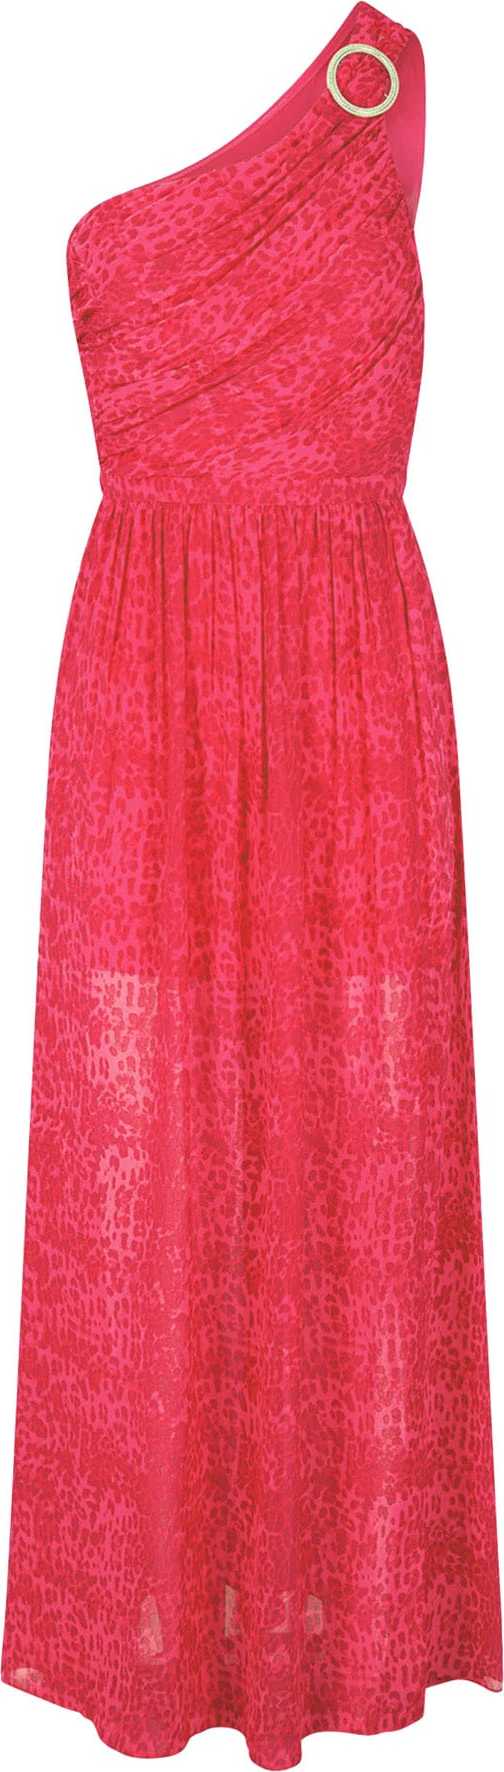 Morgan Společenské šaty 'RAMIR' pitaya / růže